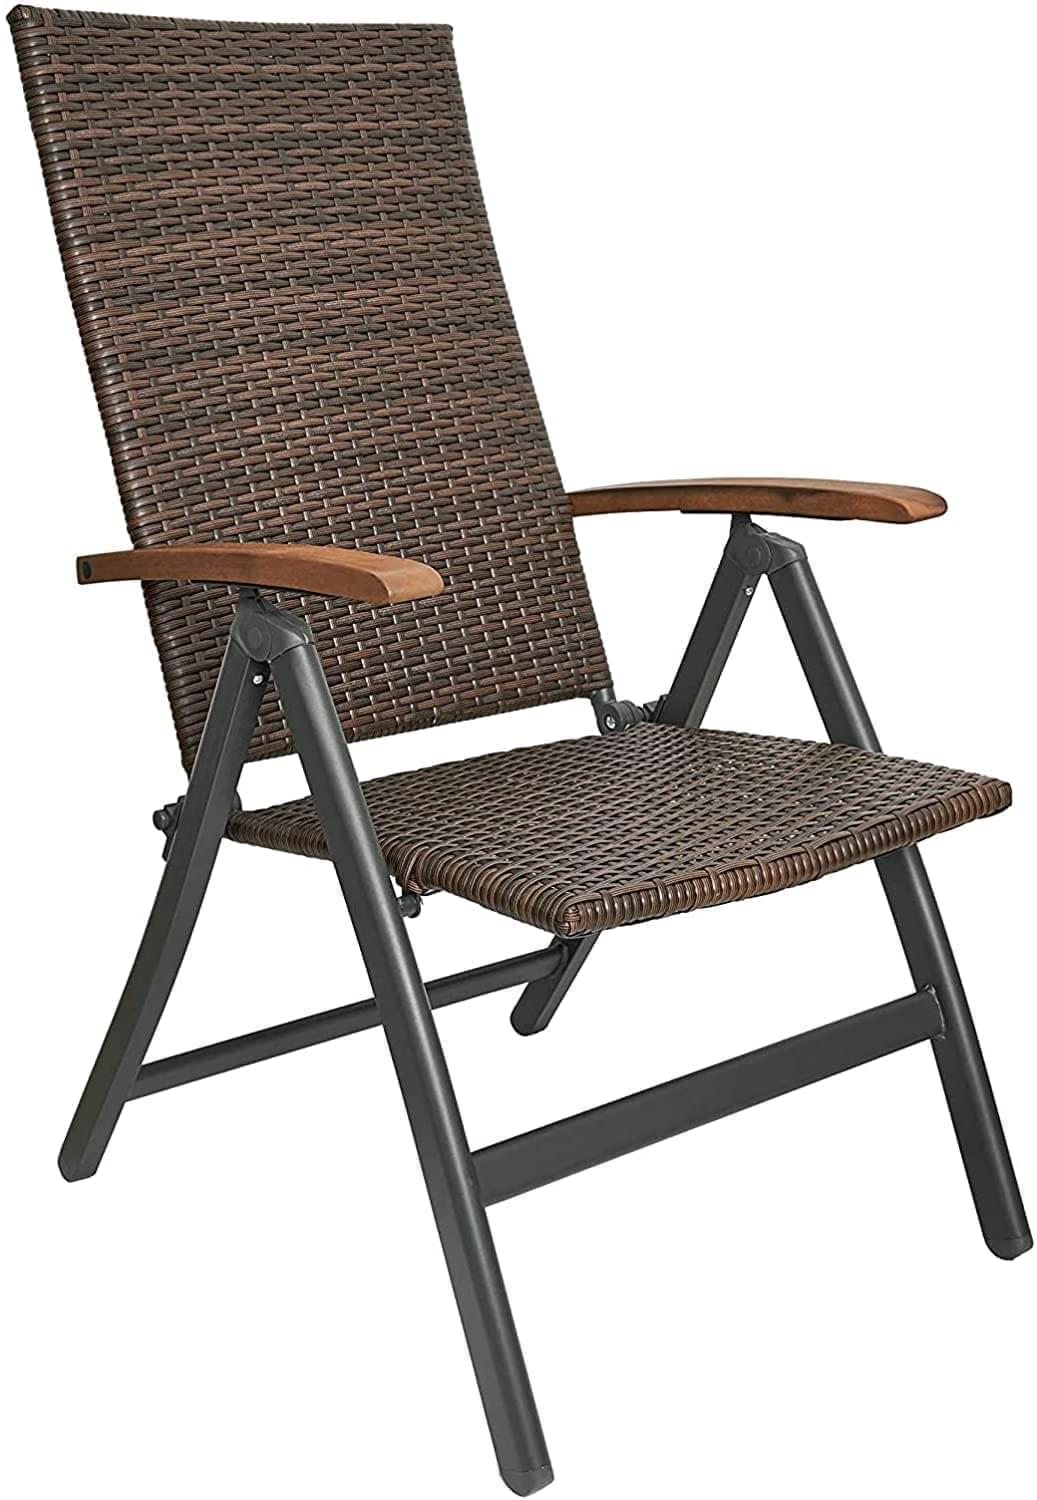 2 x Rattan & Aluminium Folding Reclining Garden Outdoor Indoor Picnic Arm Chair Seat Sun Lounger